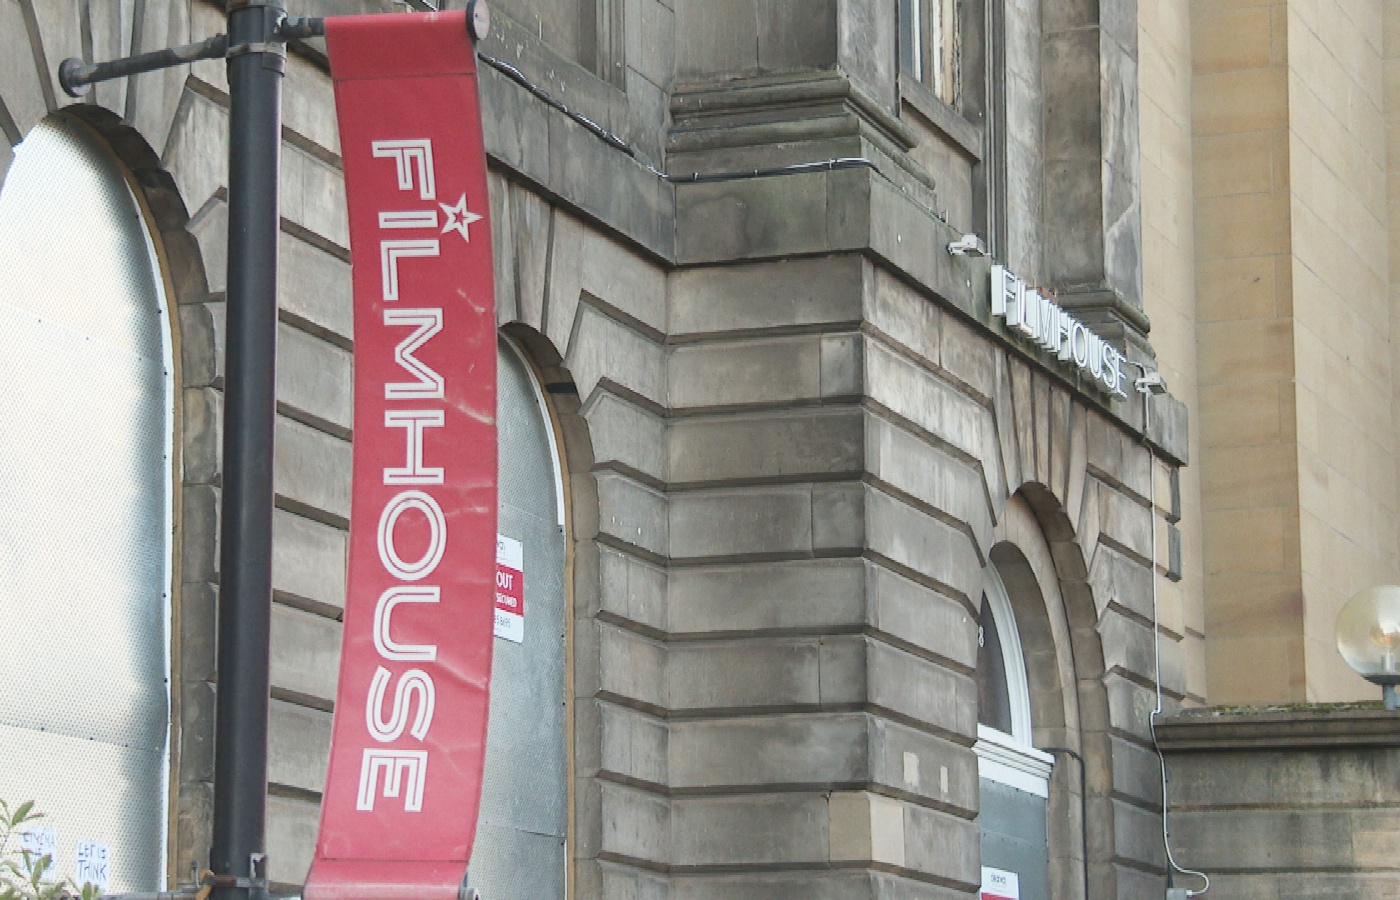 Edinburgh Filmhouse